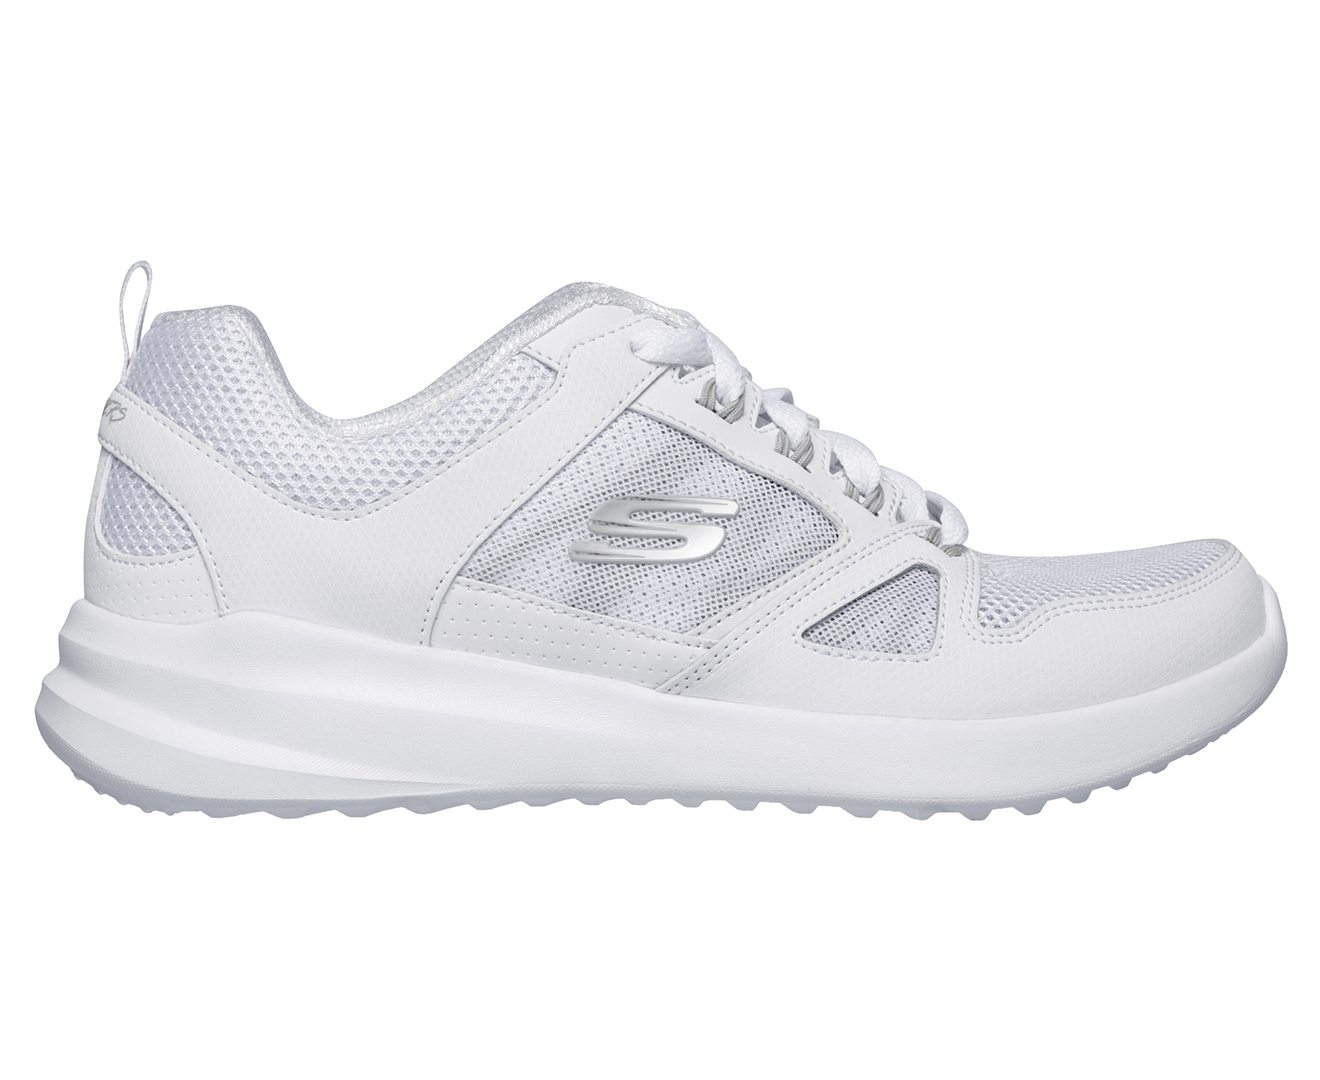 Skechers Women's Skybound Sports Training Shoes - White | Www.catch.co.nz